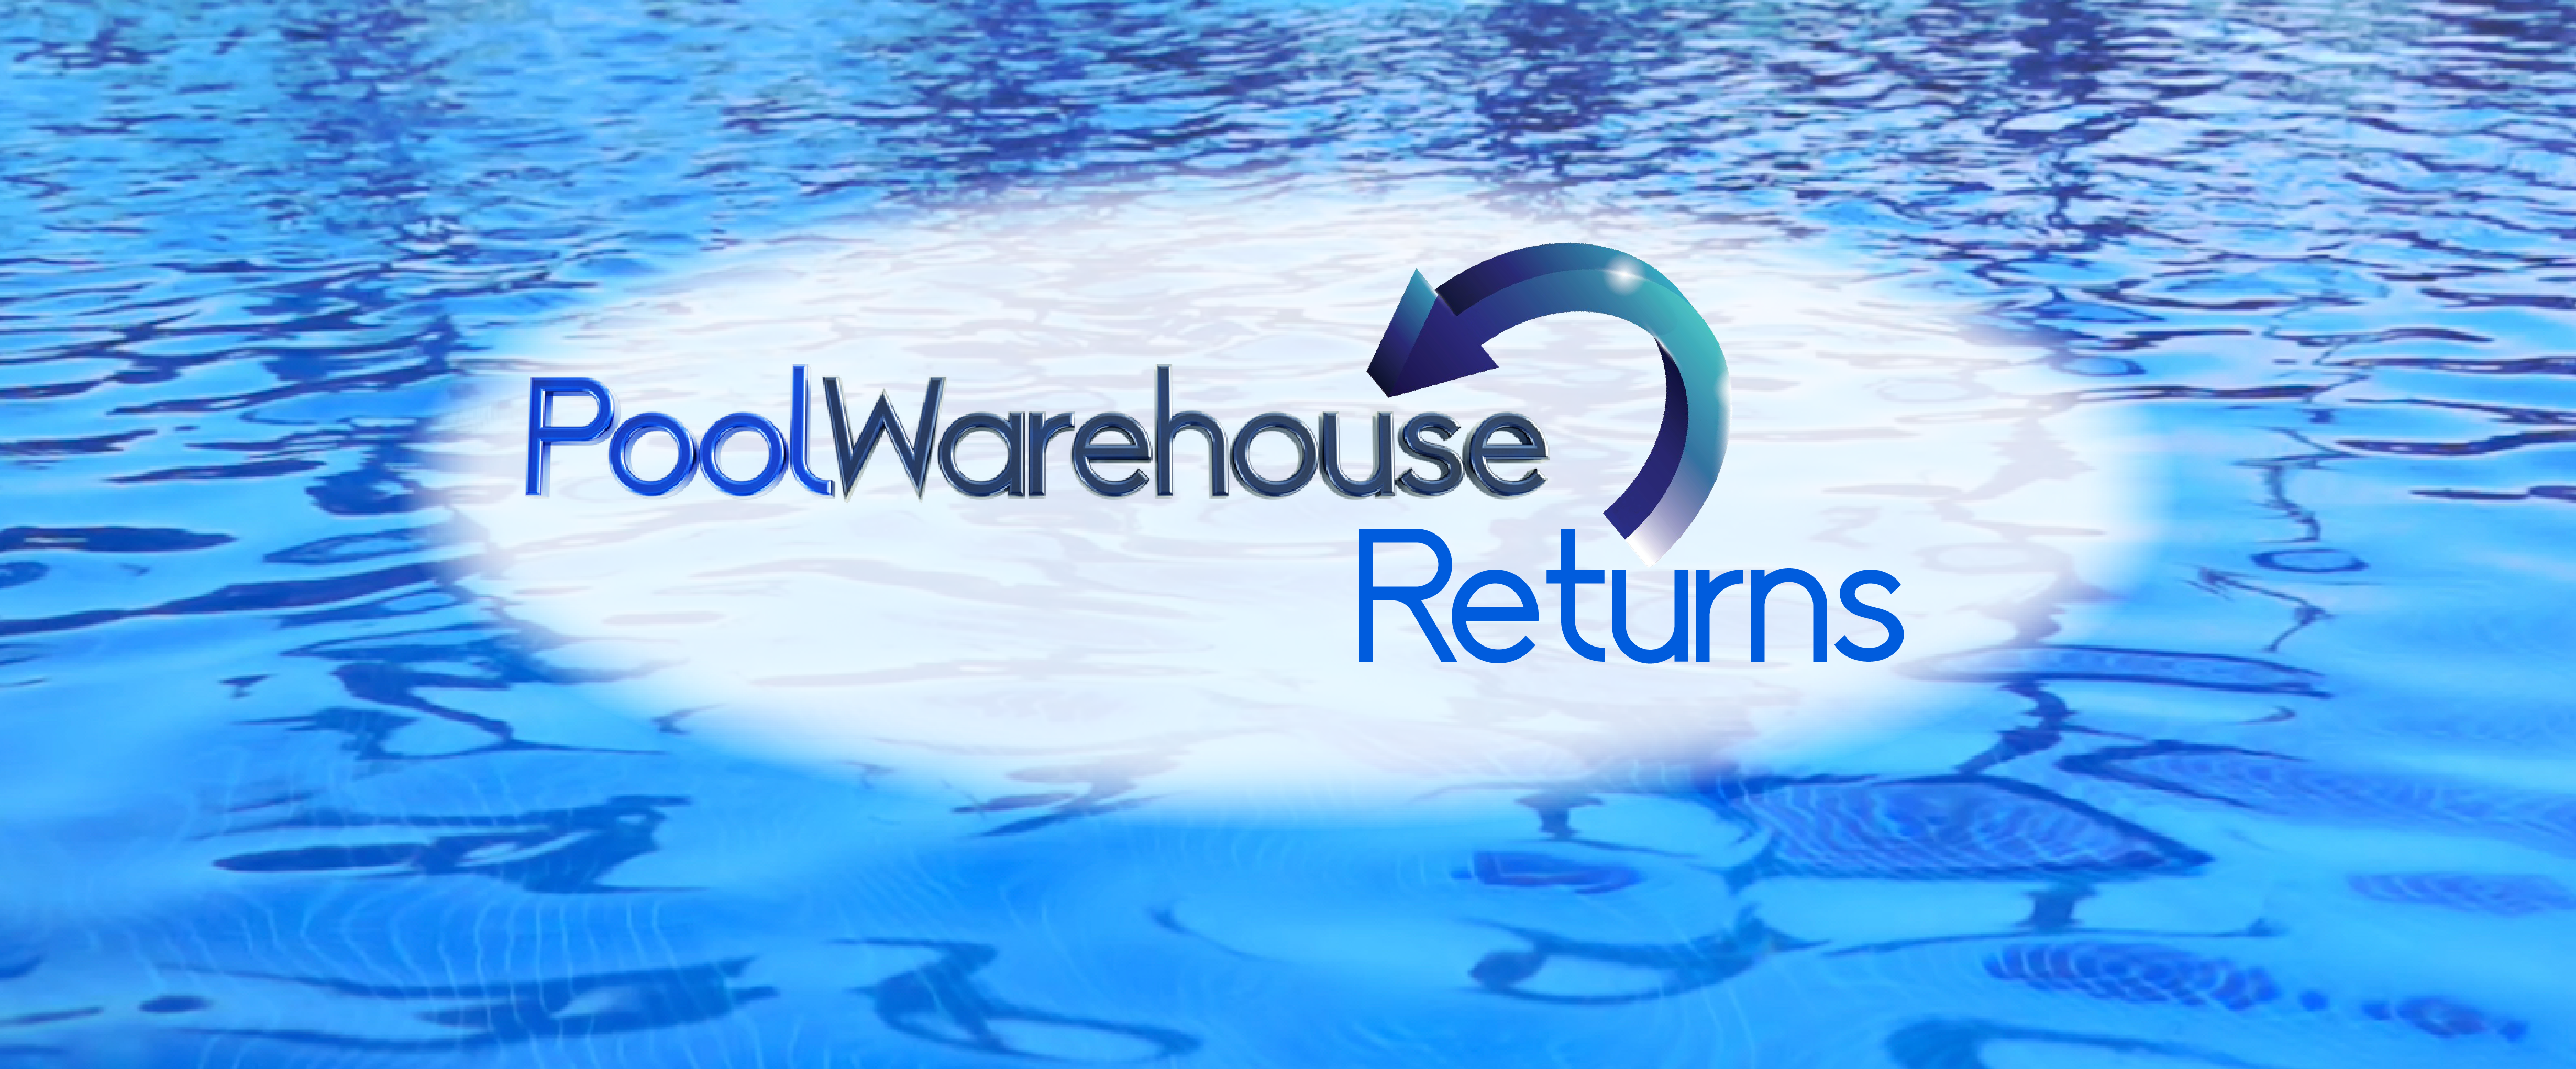 Pool Warehouse Returns 01 